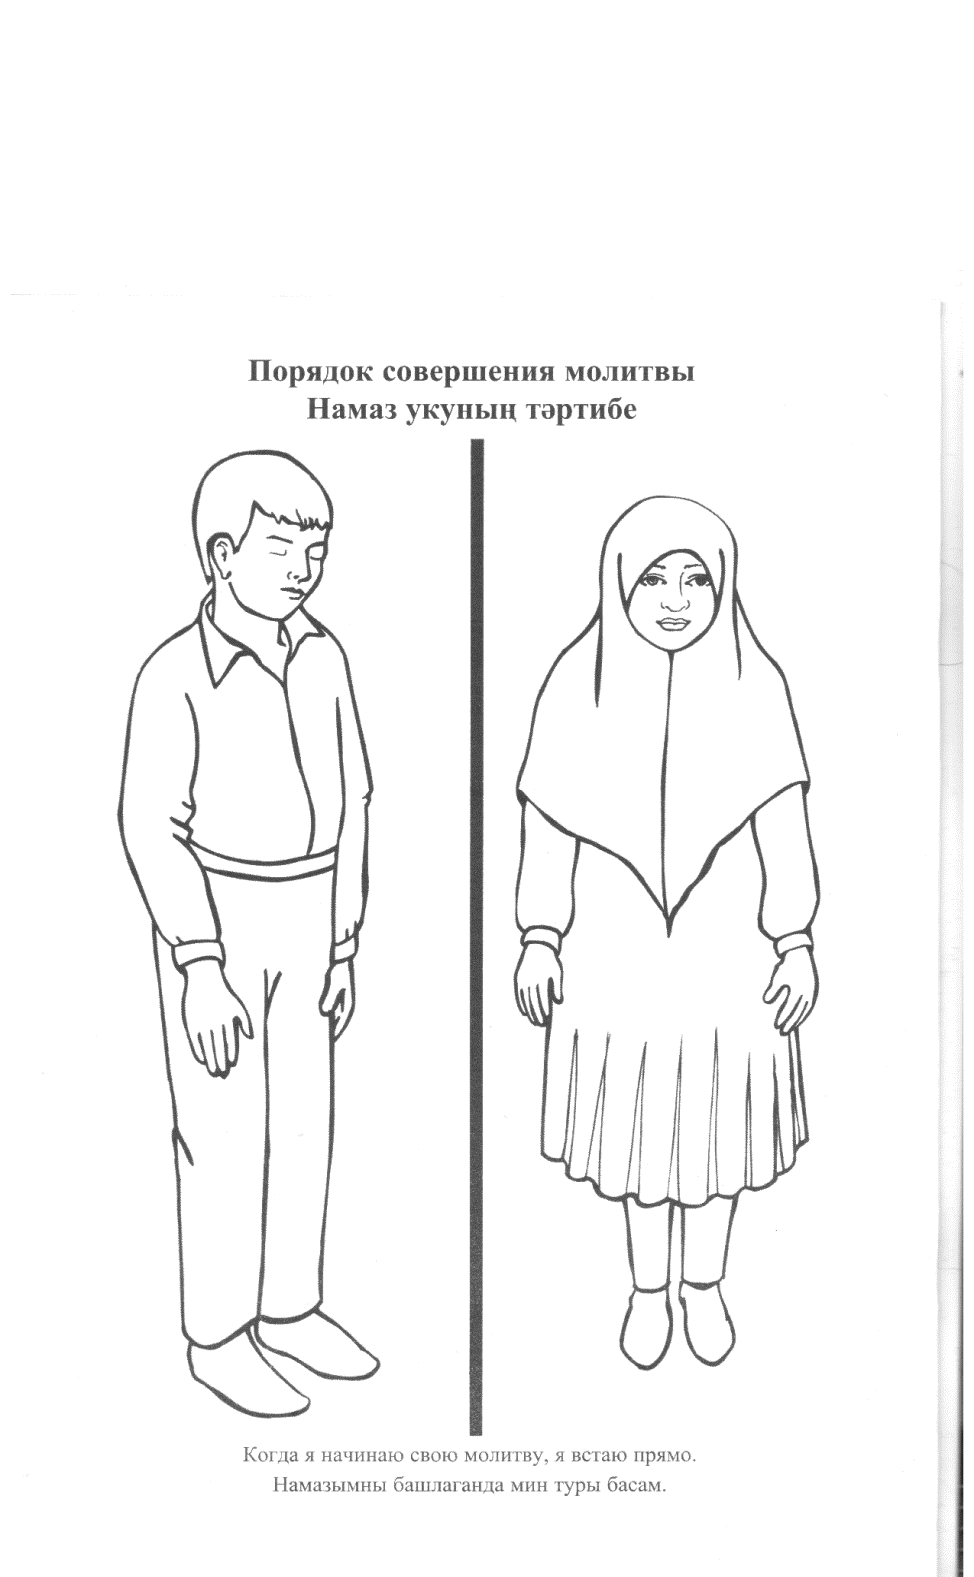 Намаз научиться женщине с нуля на русском. Молитвы для намаза. Порядок совершения намаза. Молитвы для совершения намаза. Плакат для чтения намаза.